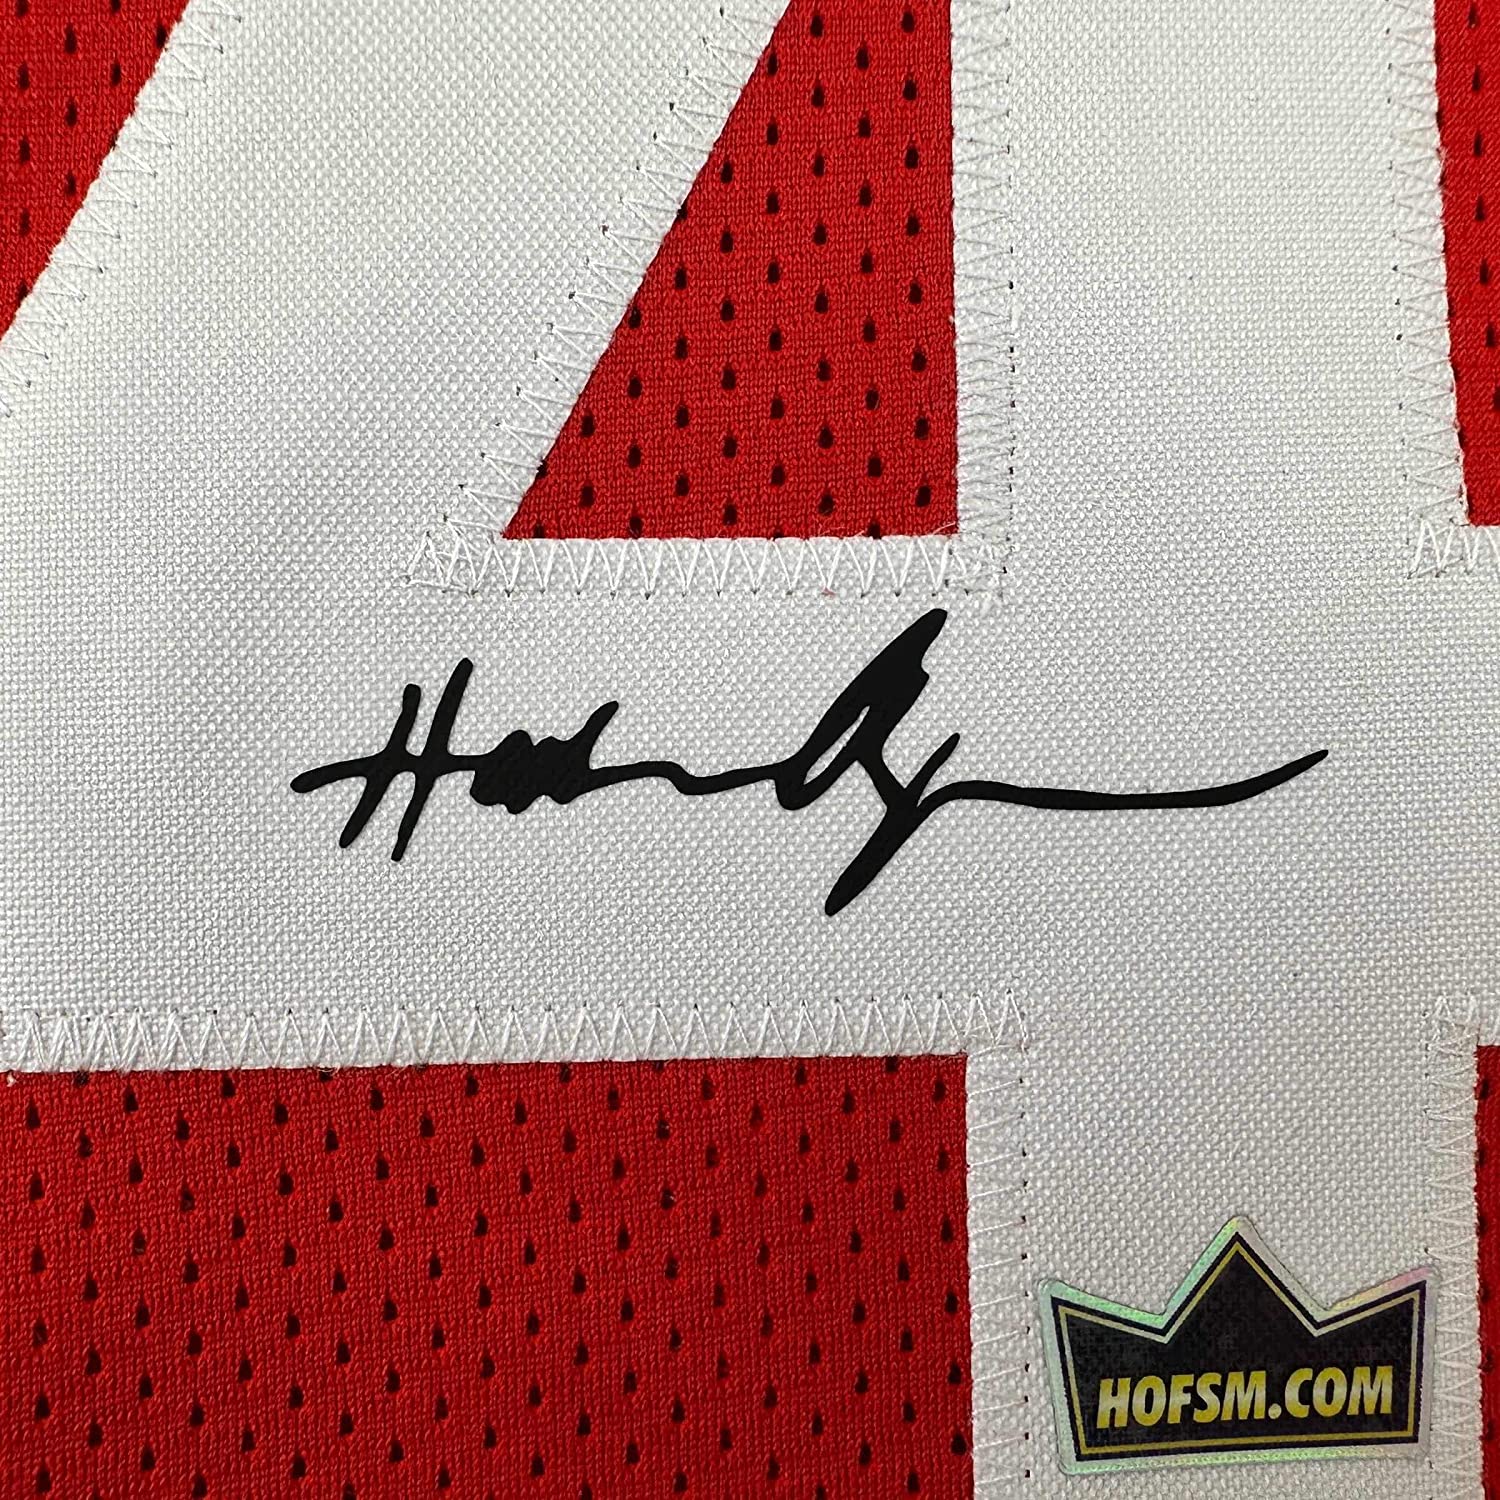 Houston Rockets Hakeem Olajuwon Autographed Framed Red Jersey JSA Stock  #209446 - Mill Creek Sports